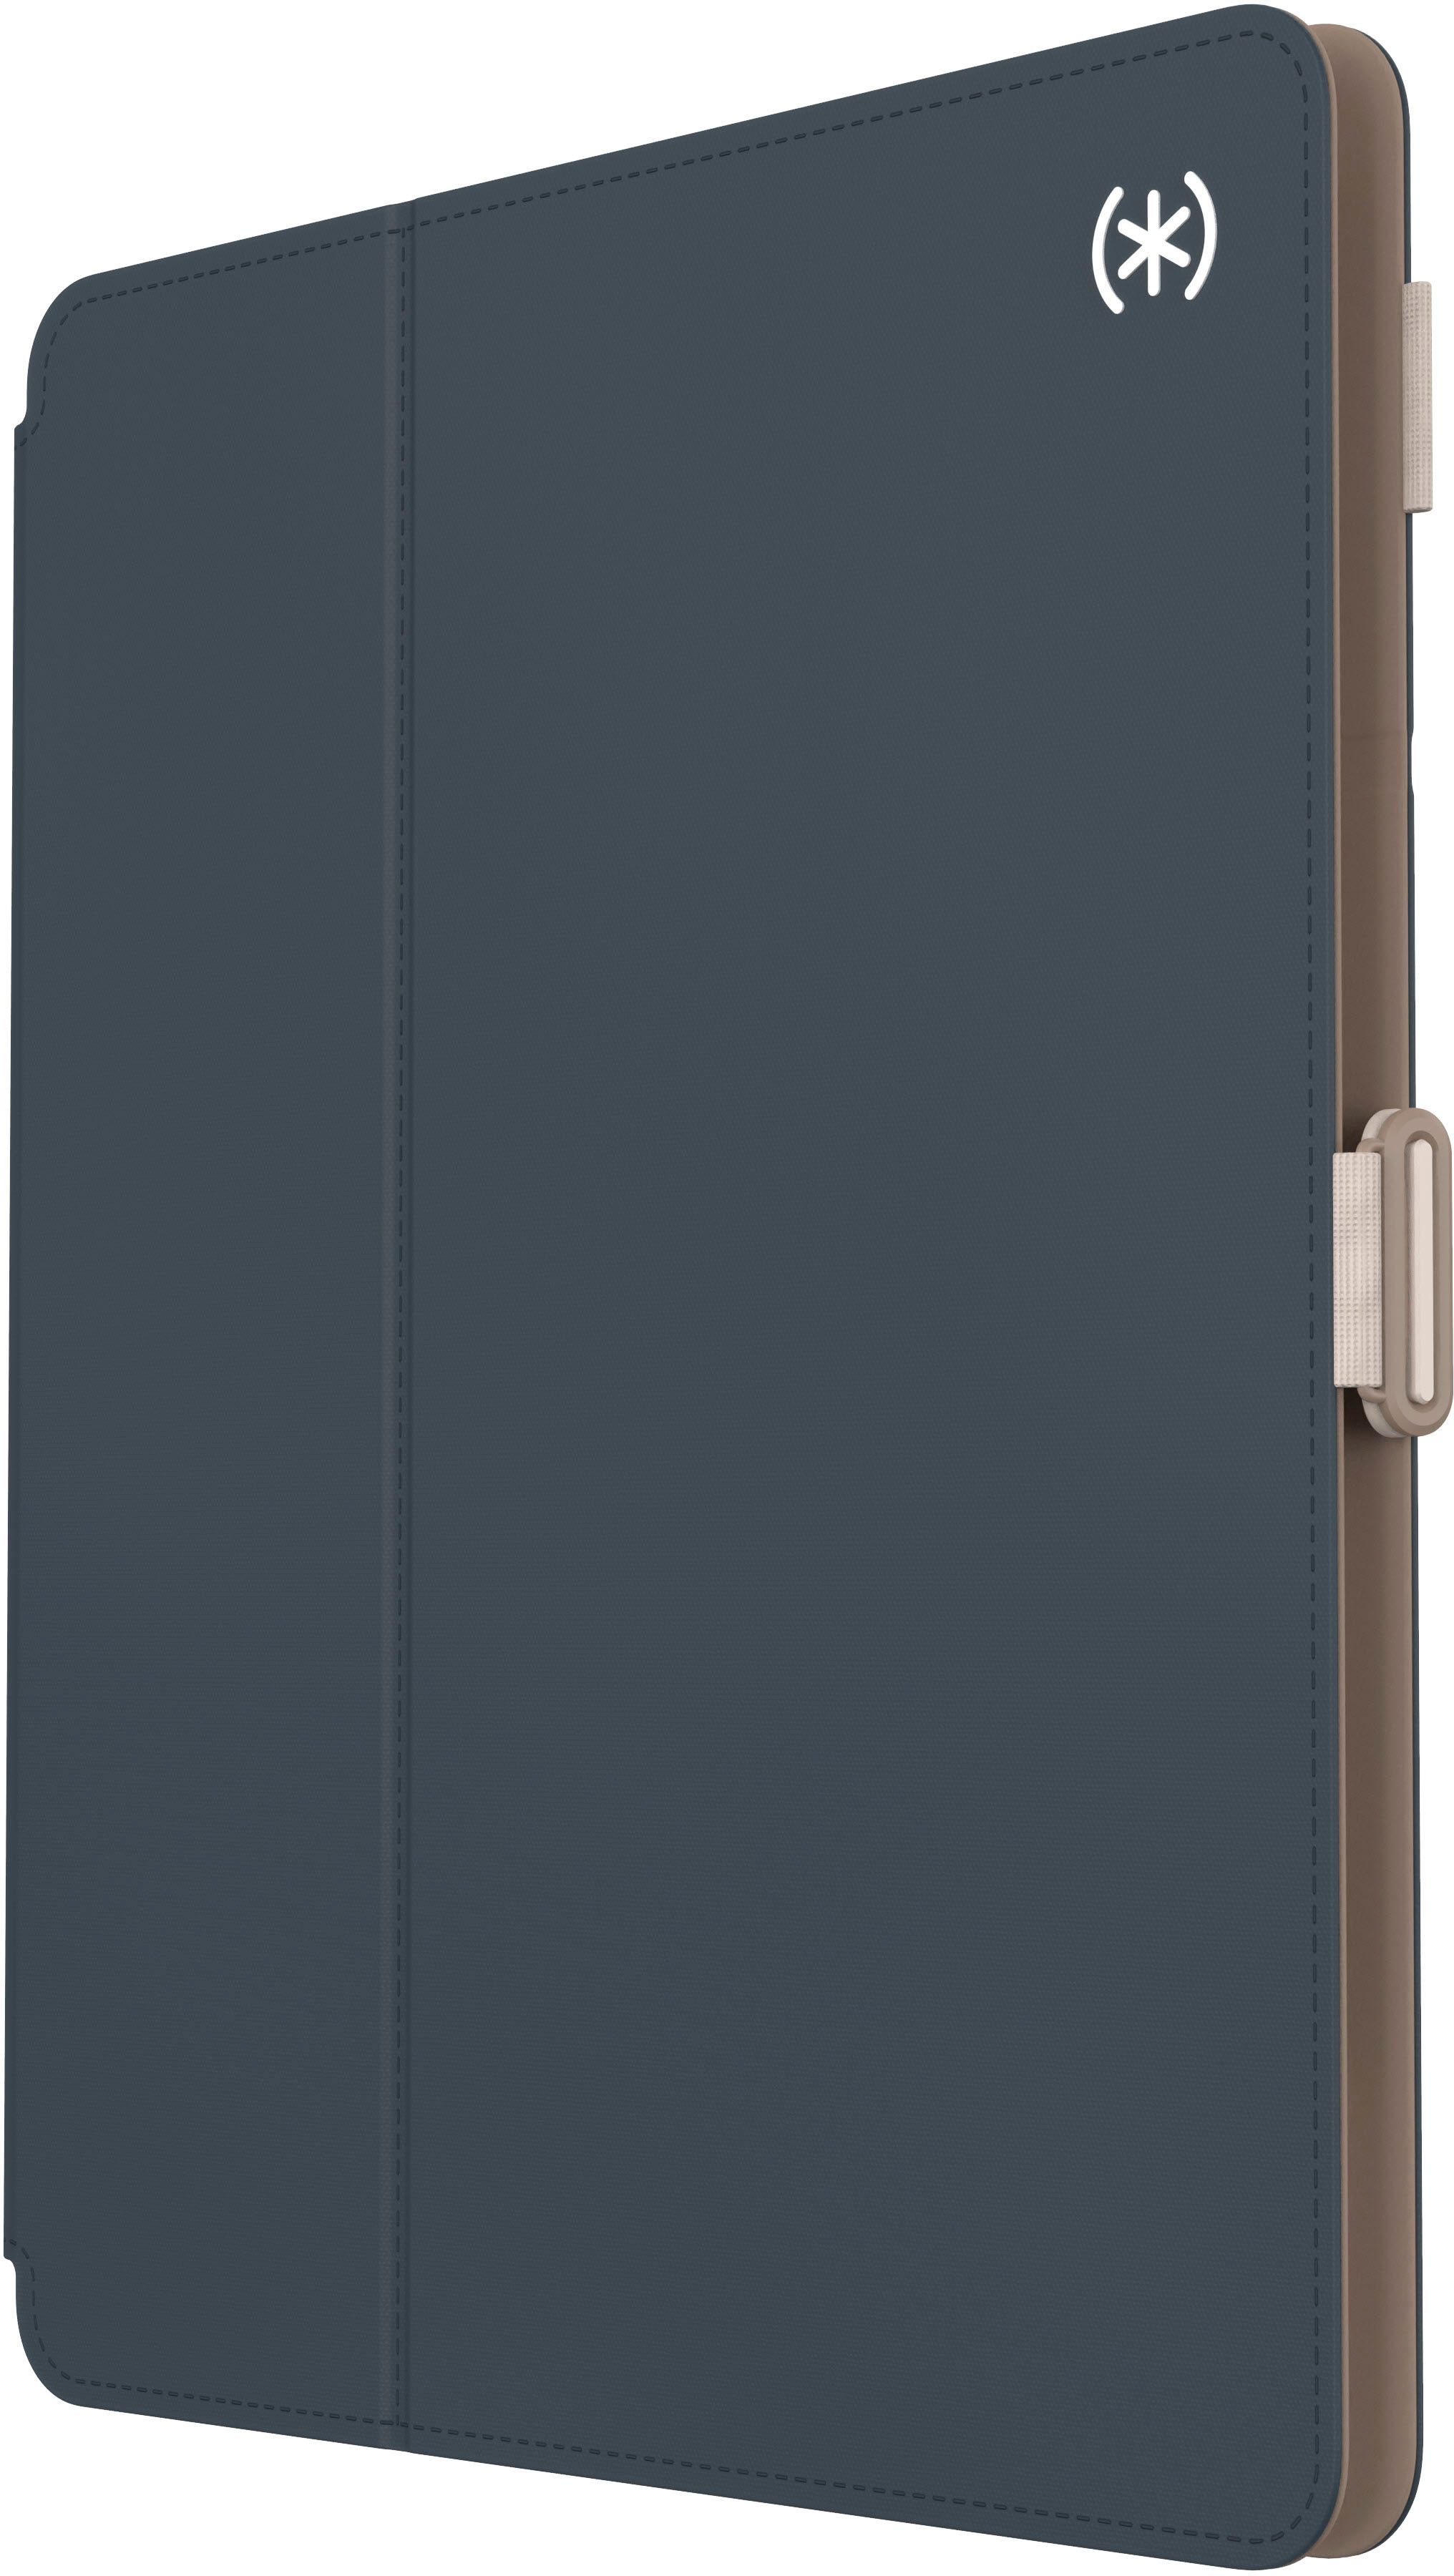 Paperlike's Charcoal Folio Case